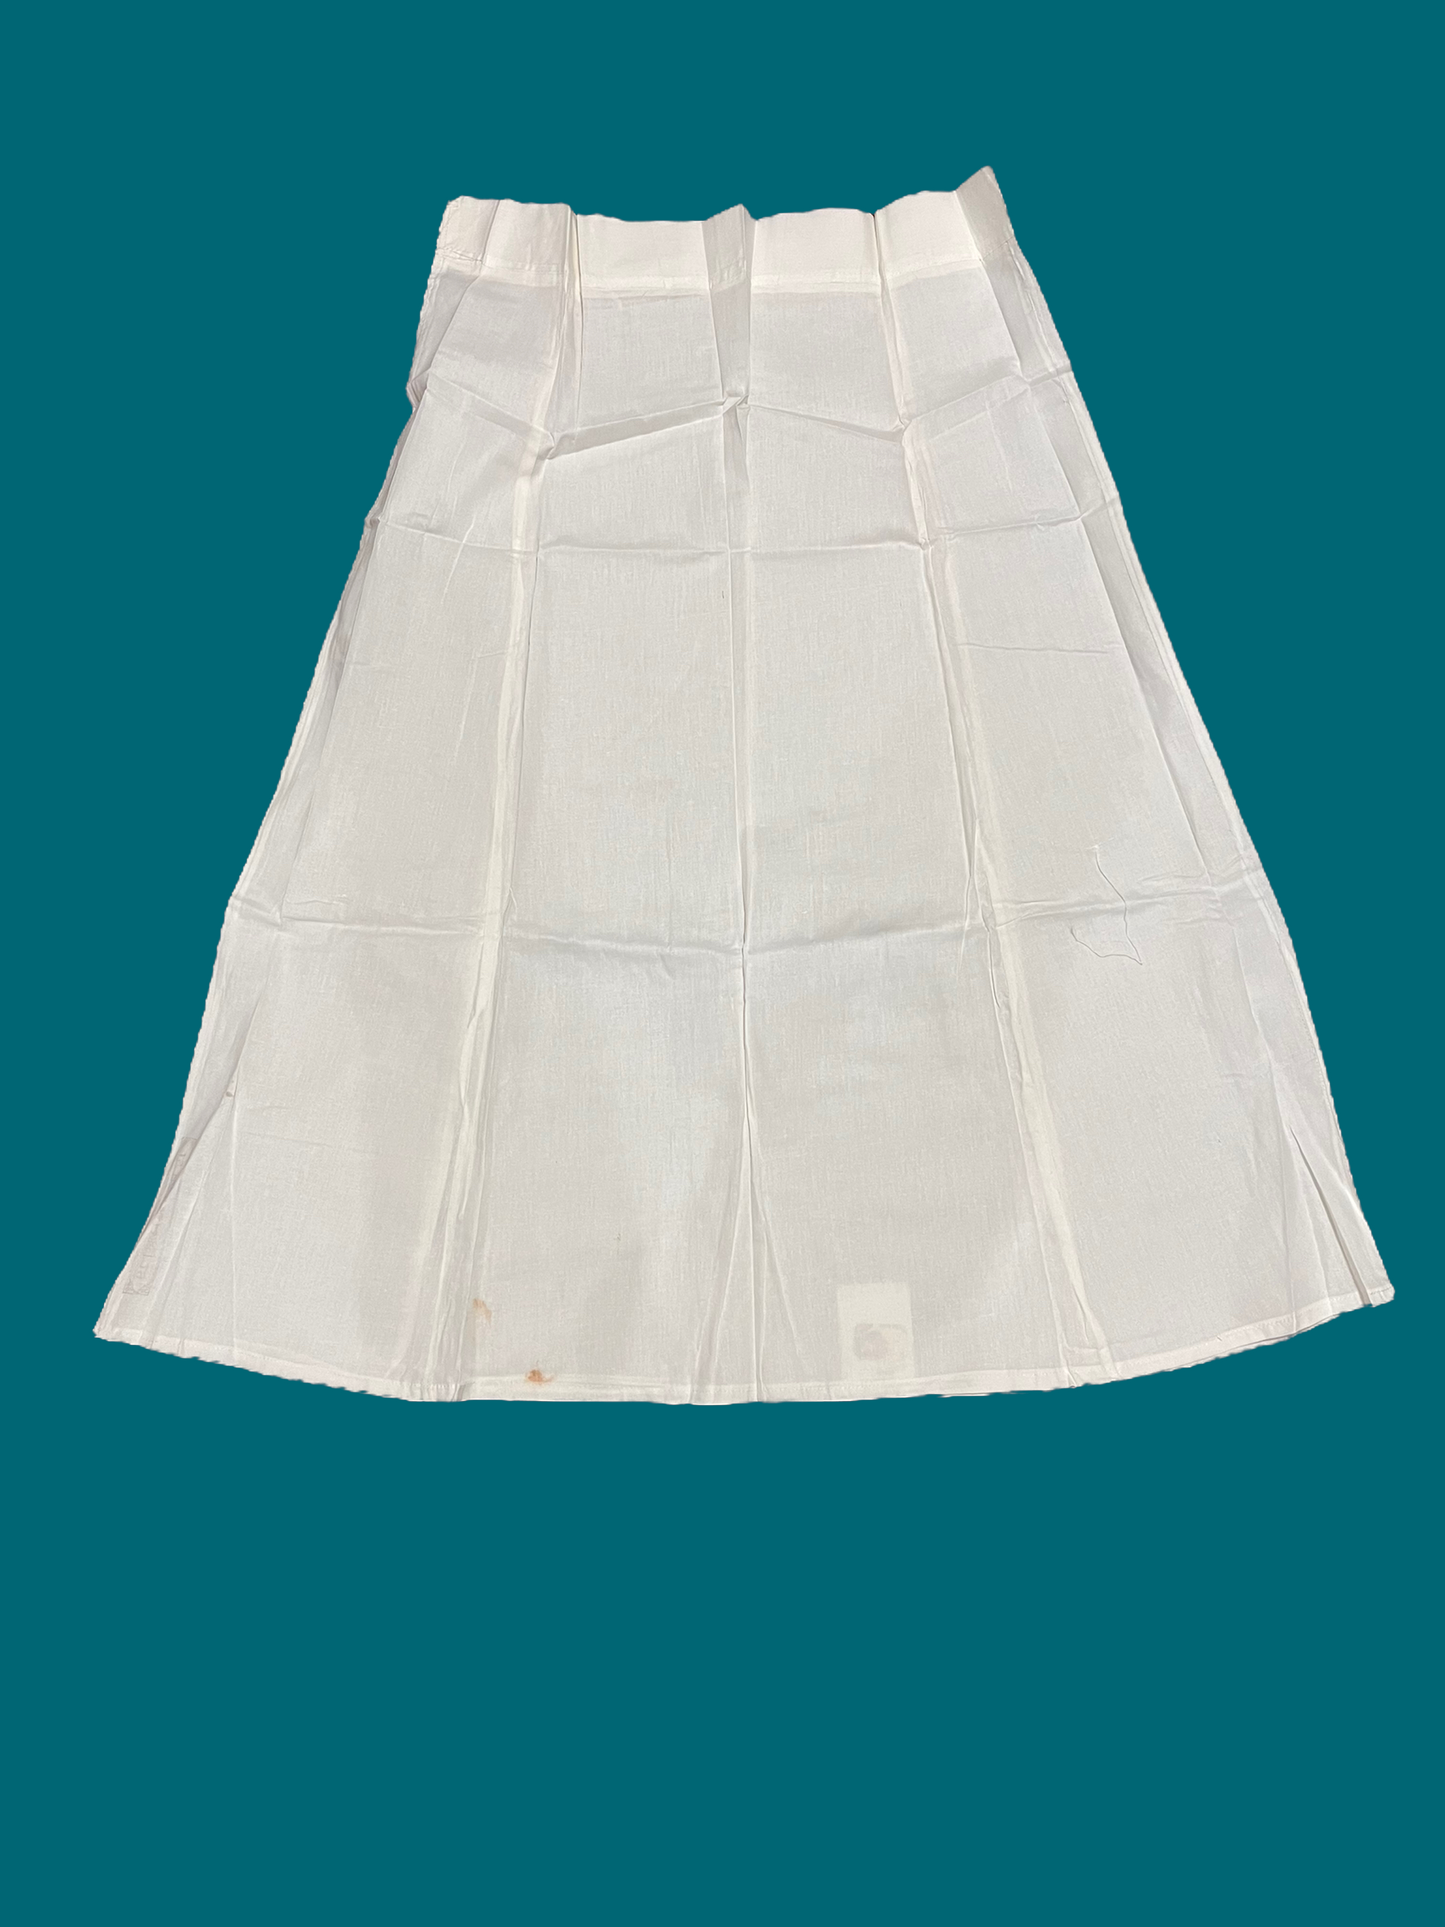 Essential White Plain Cotton Petticoat for Women -16